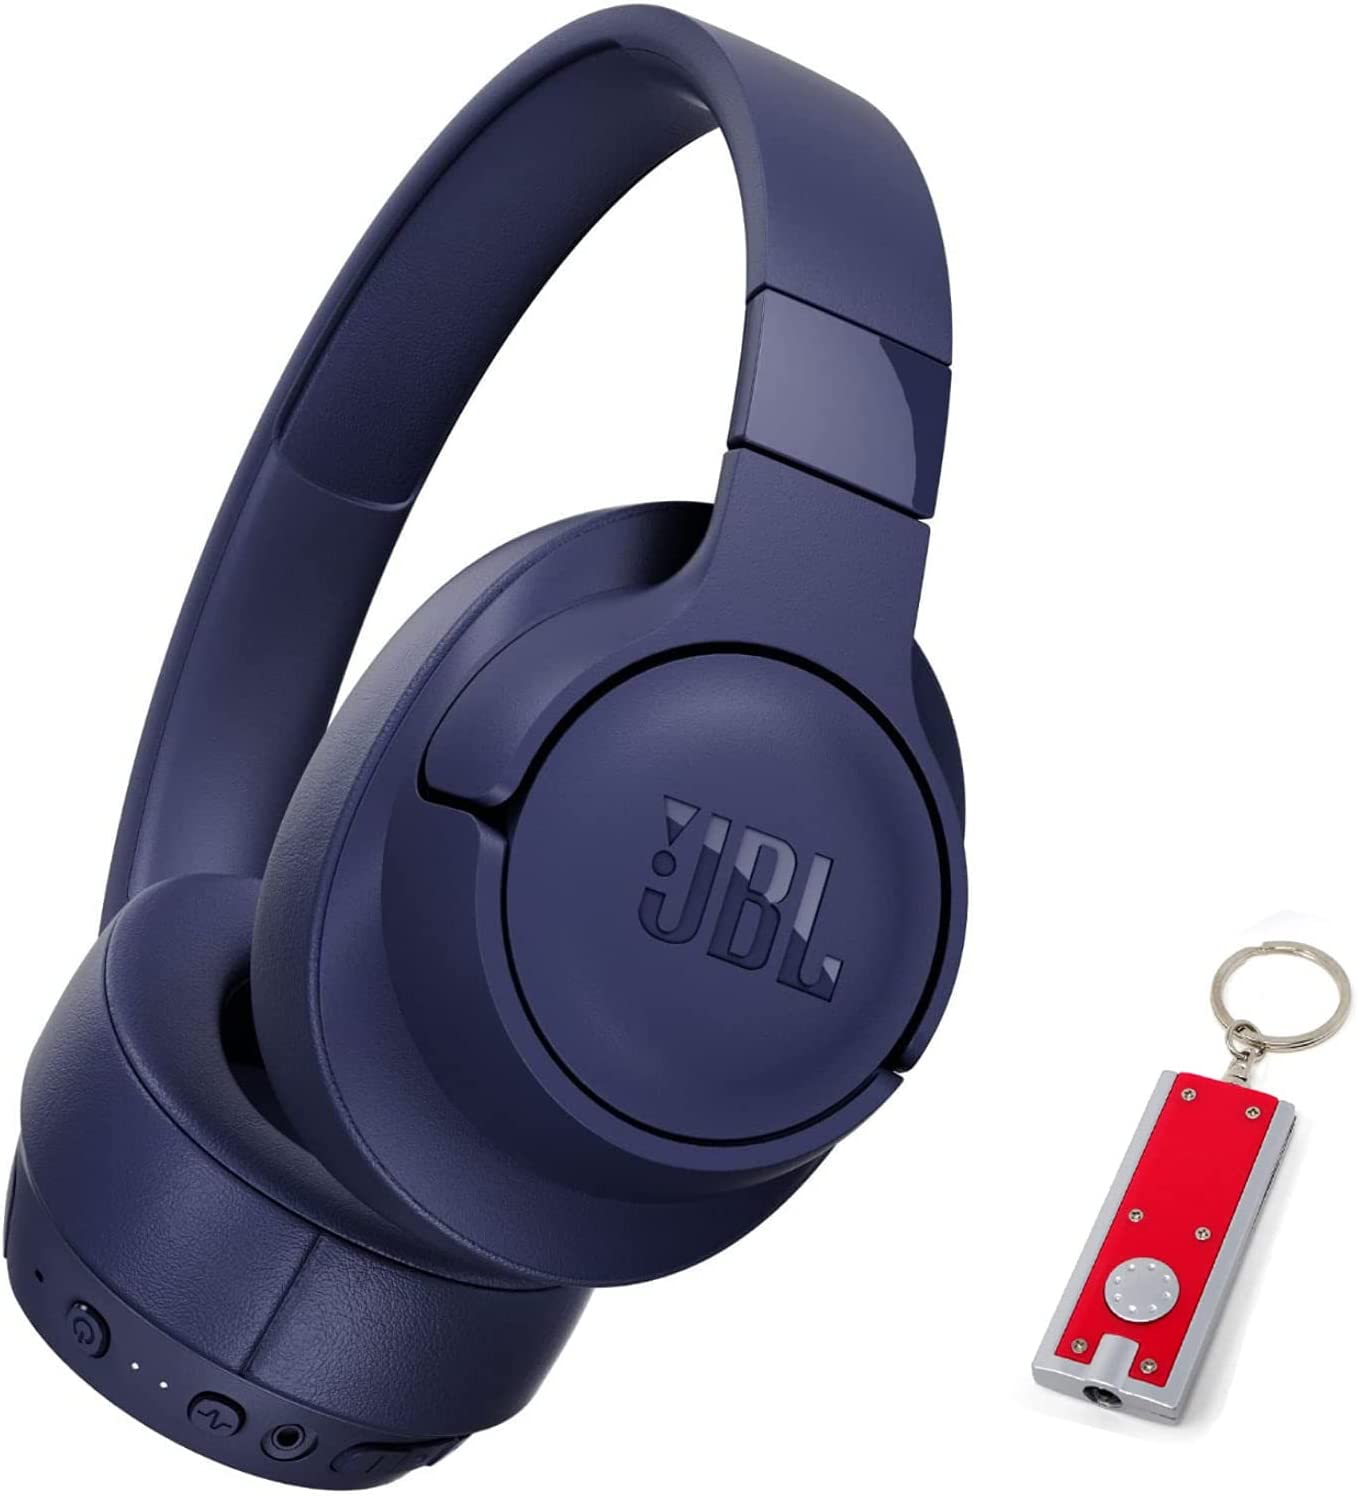 JBL Tune 750BTNC - On-Ear Wireless Bluetooth Headphones with Noise Cancellation, Includes LED Flashlight Key Chain Bonus (Blue)